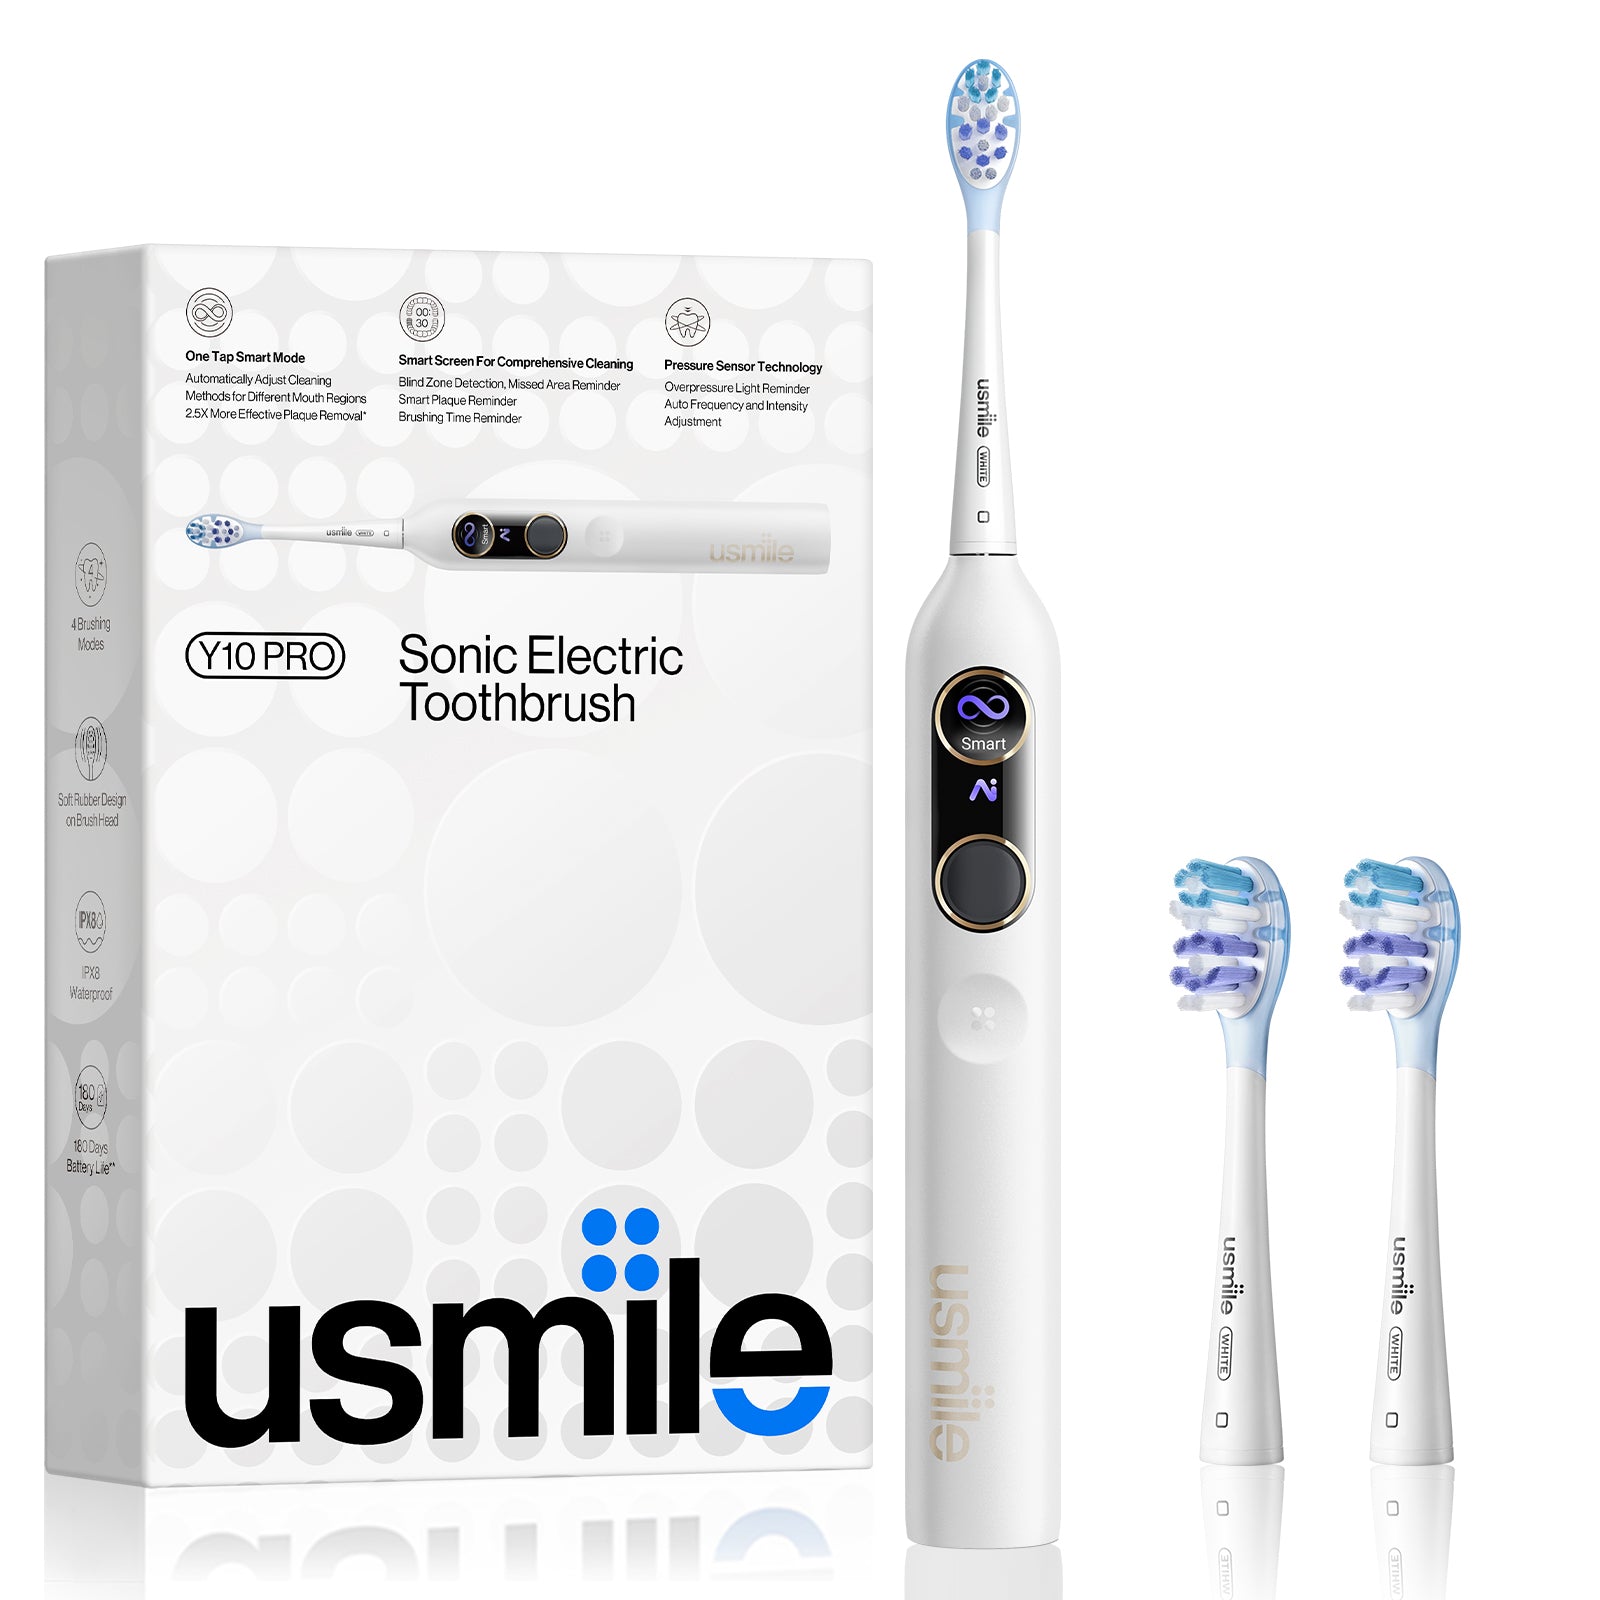 usmile Y10 PRO Smart Toothbrush